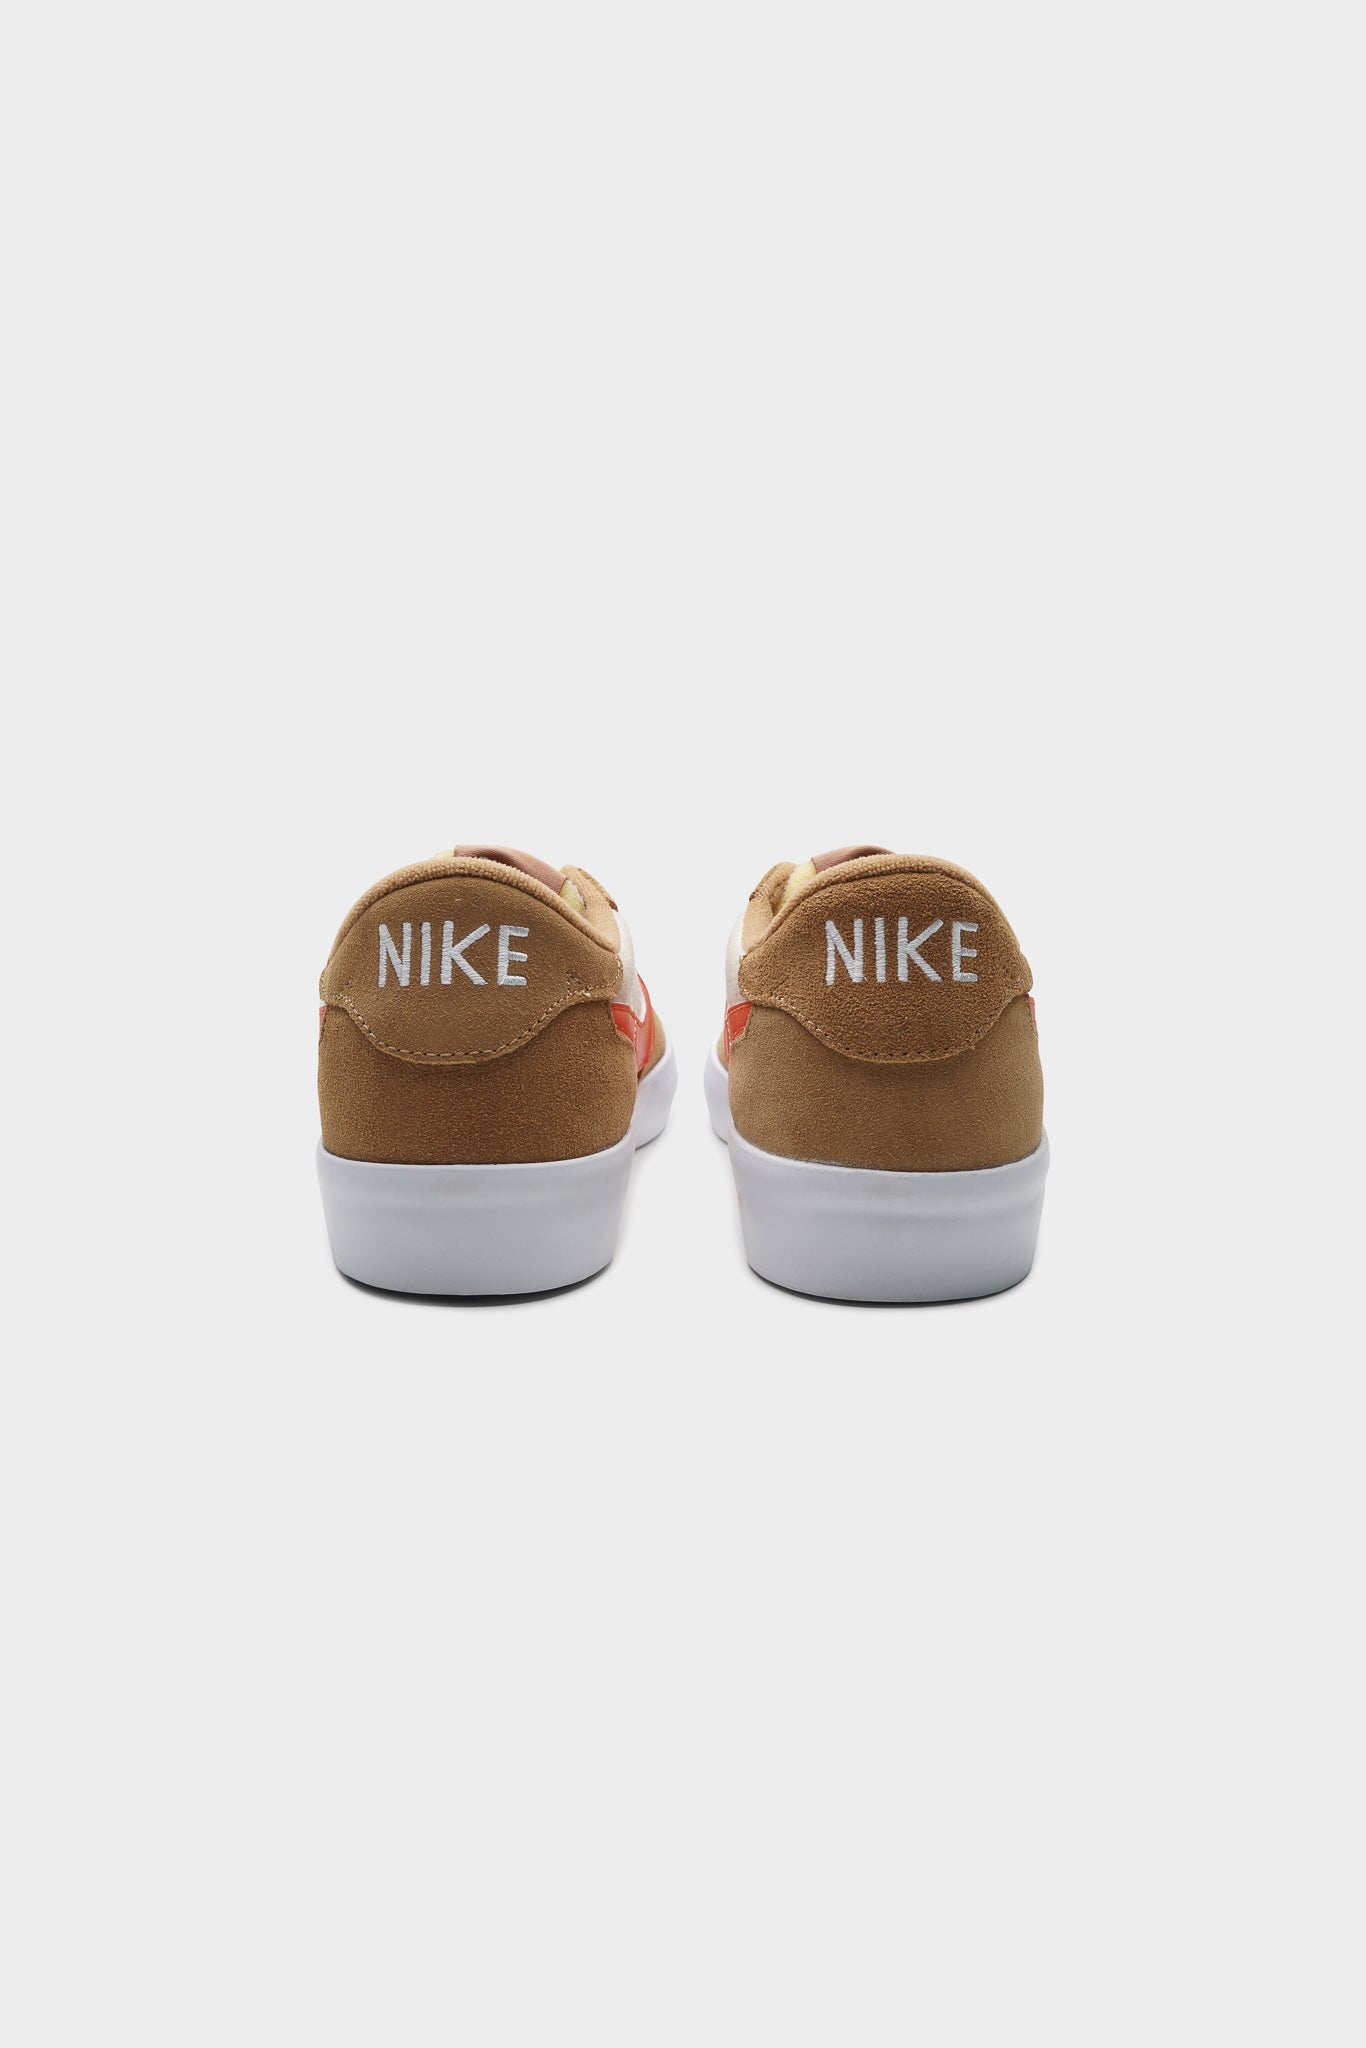 Selectshop FRAME - NIKE SB Nike SB "Heritage Vulc" Footwear Dubai